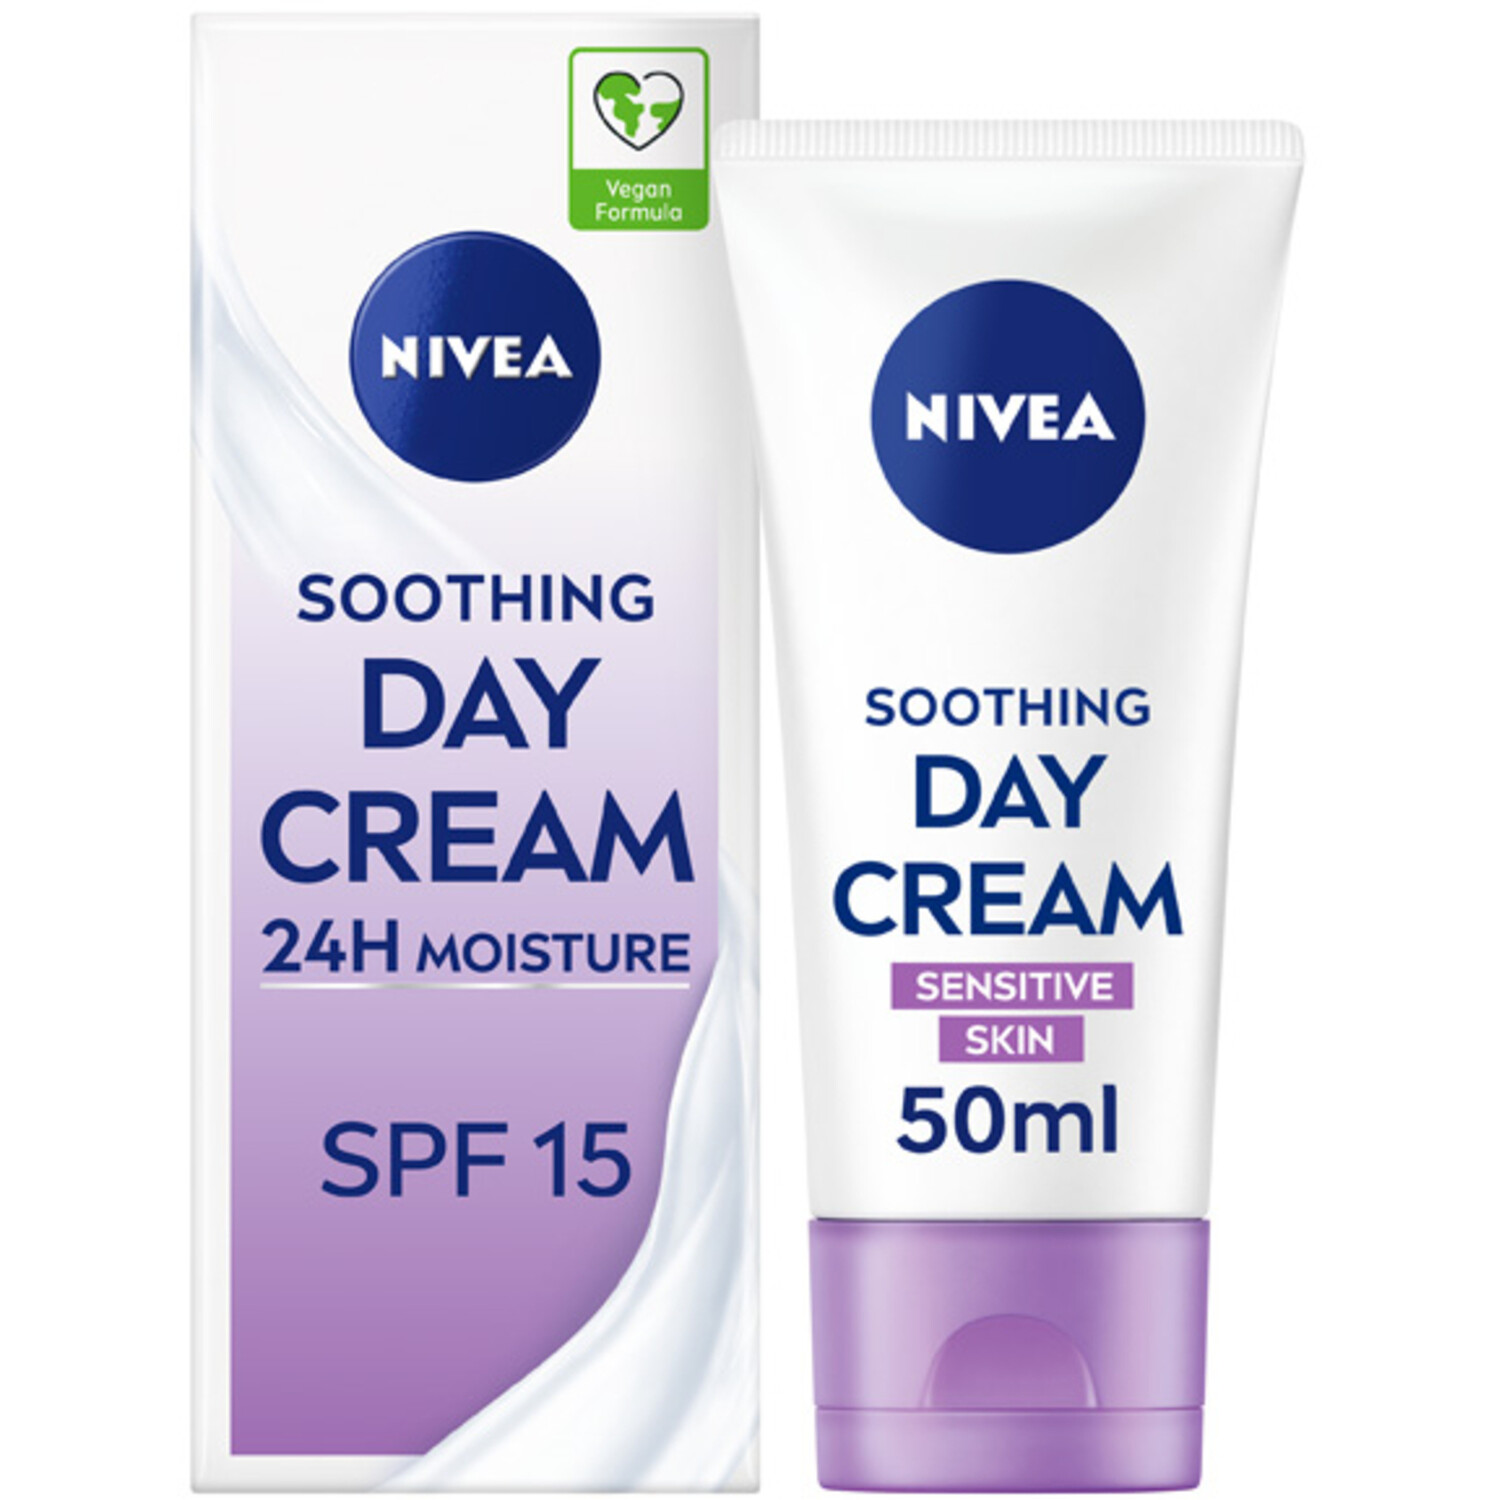 Nivea Soothing Day Cream 50ml - White Image 1